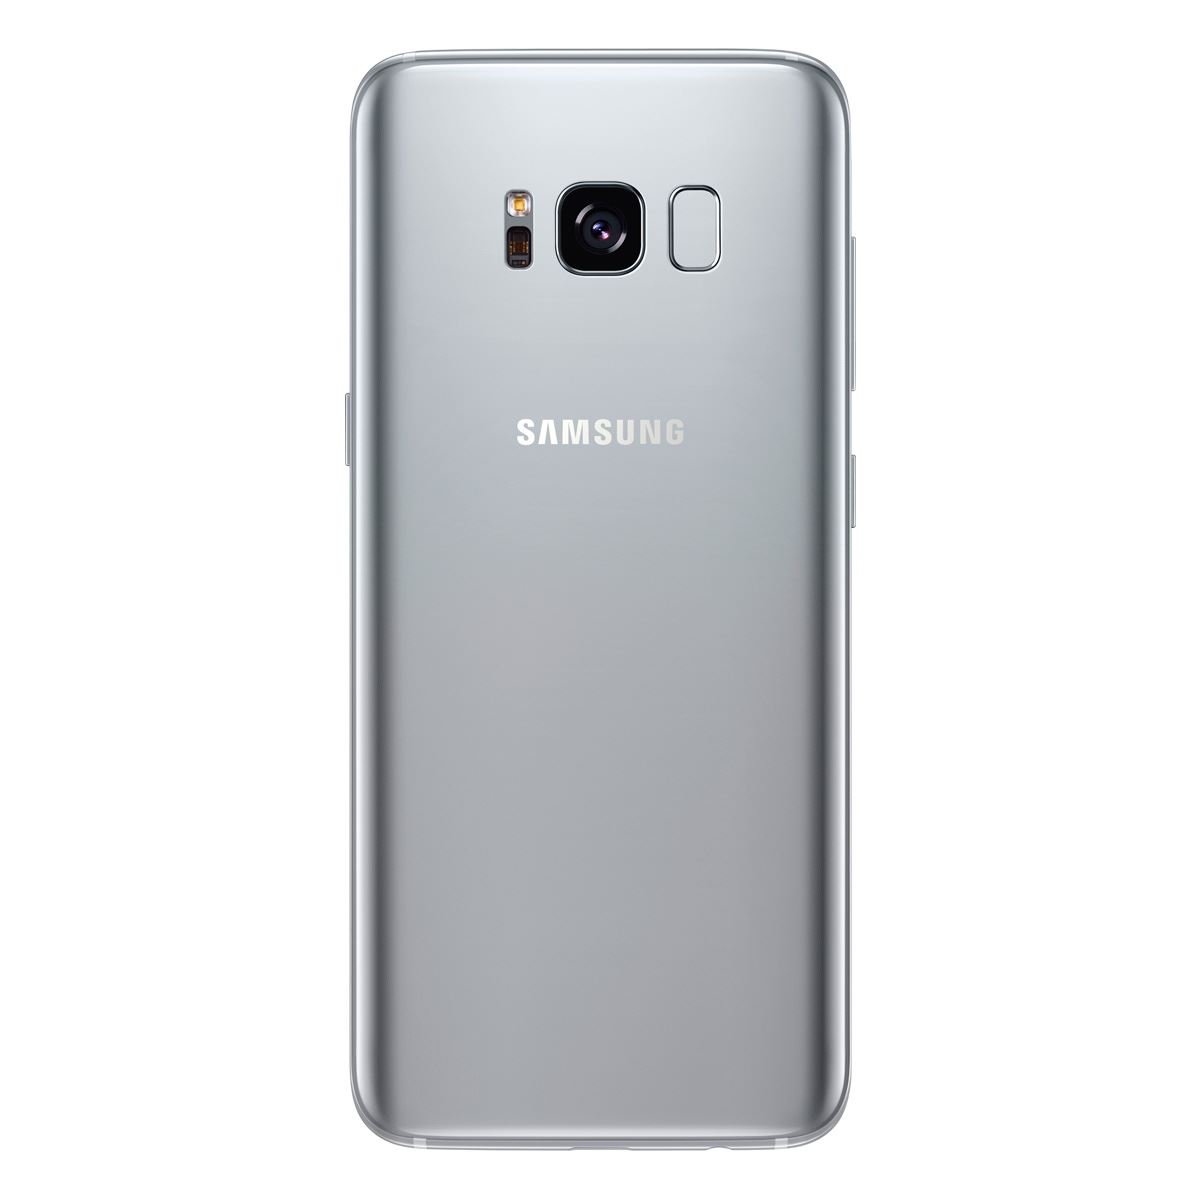 Celular SAMG950F Galaxy S8 64GB Color Plata R9 (Telcel)